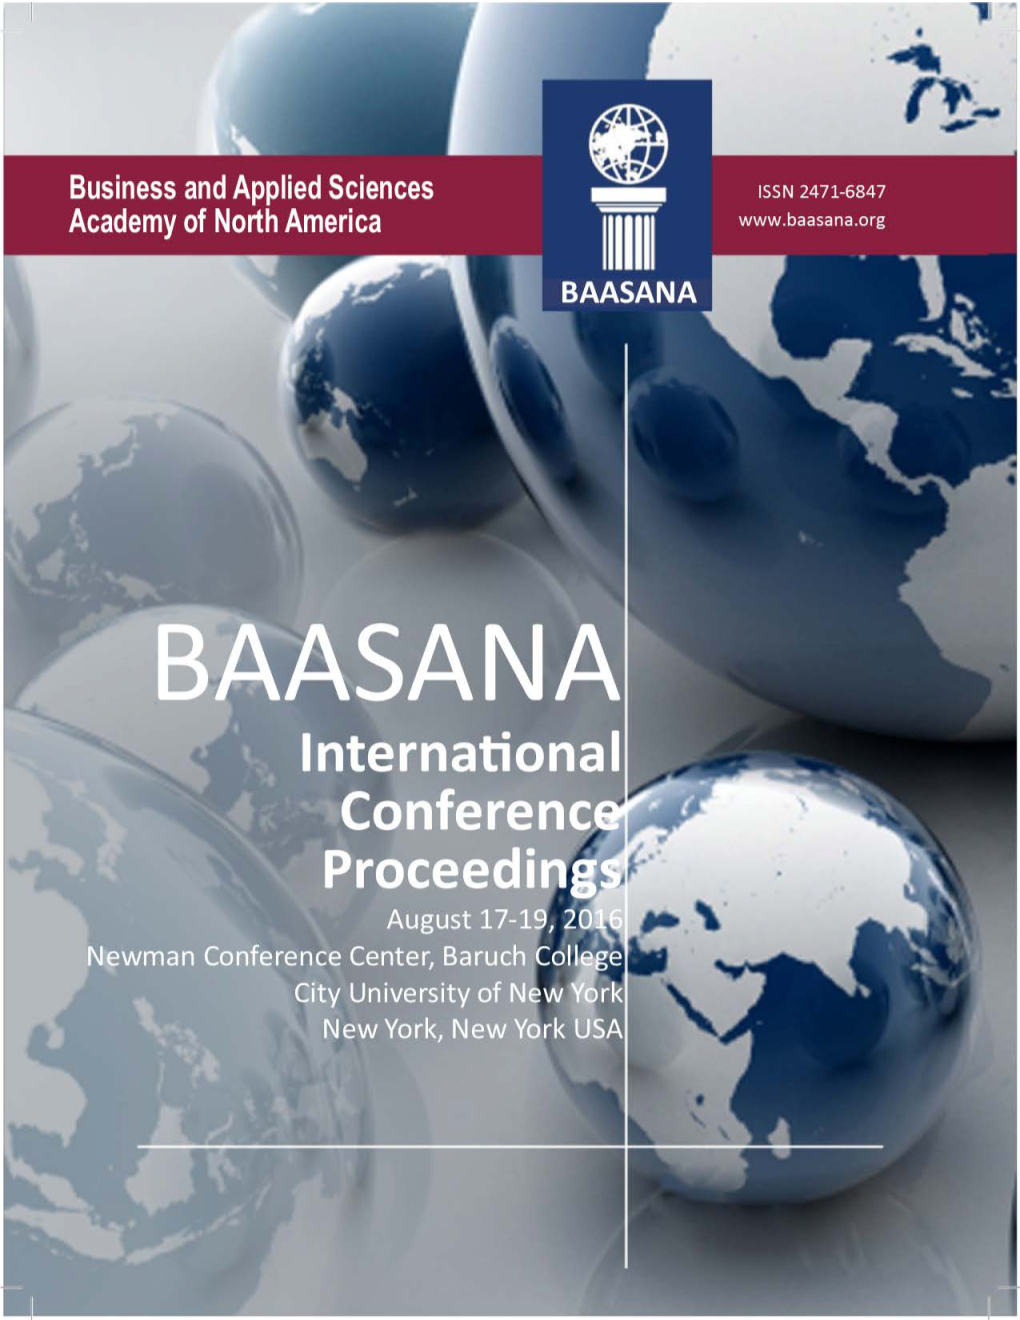 2016 BAASANA International Conference Proceedings